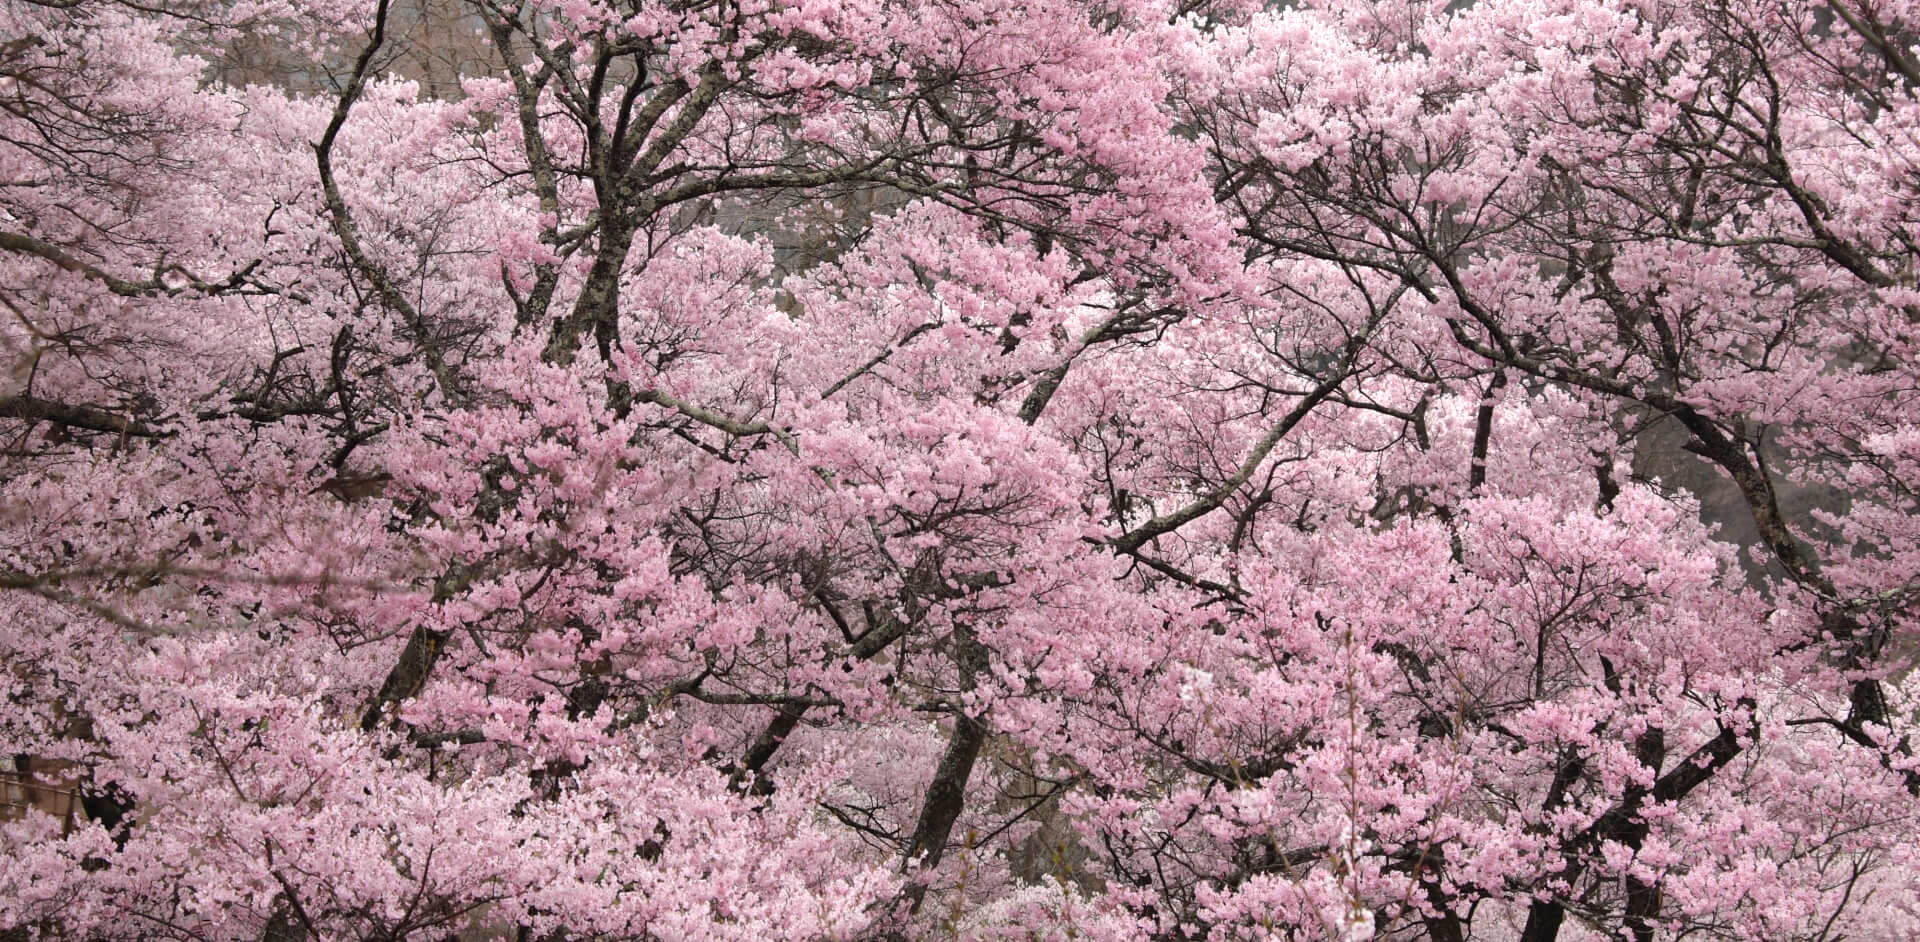 takato-castle-park-blossoms